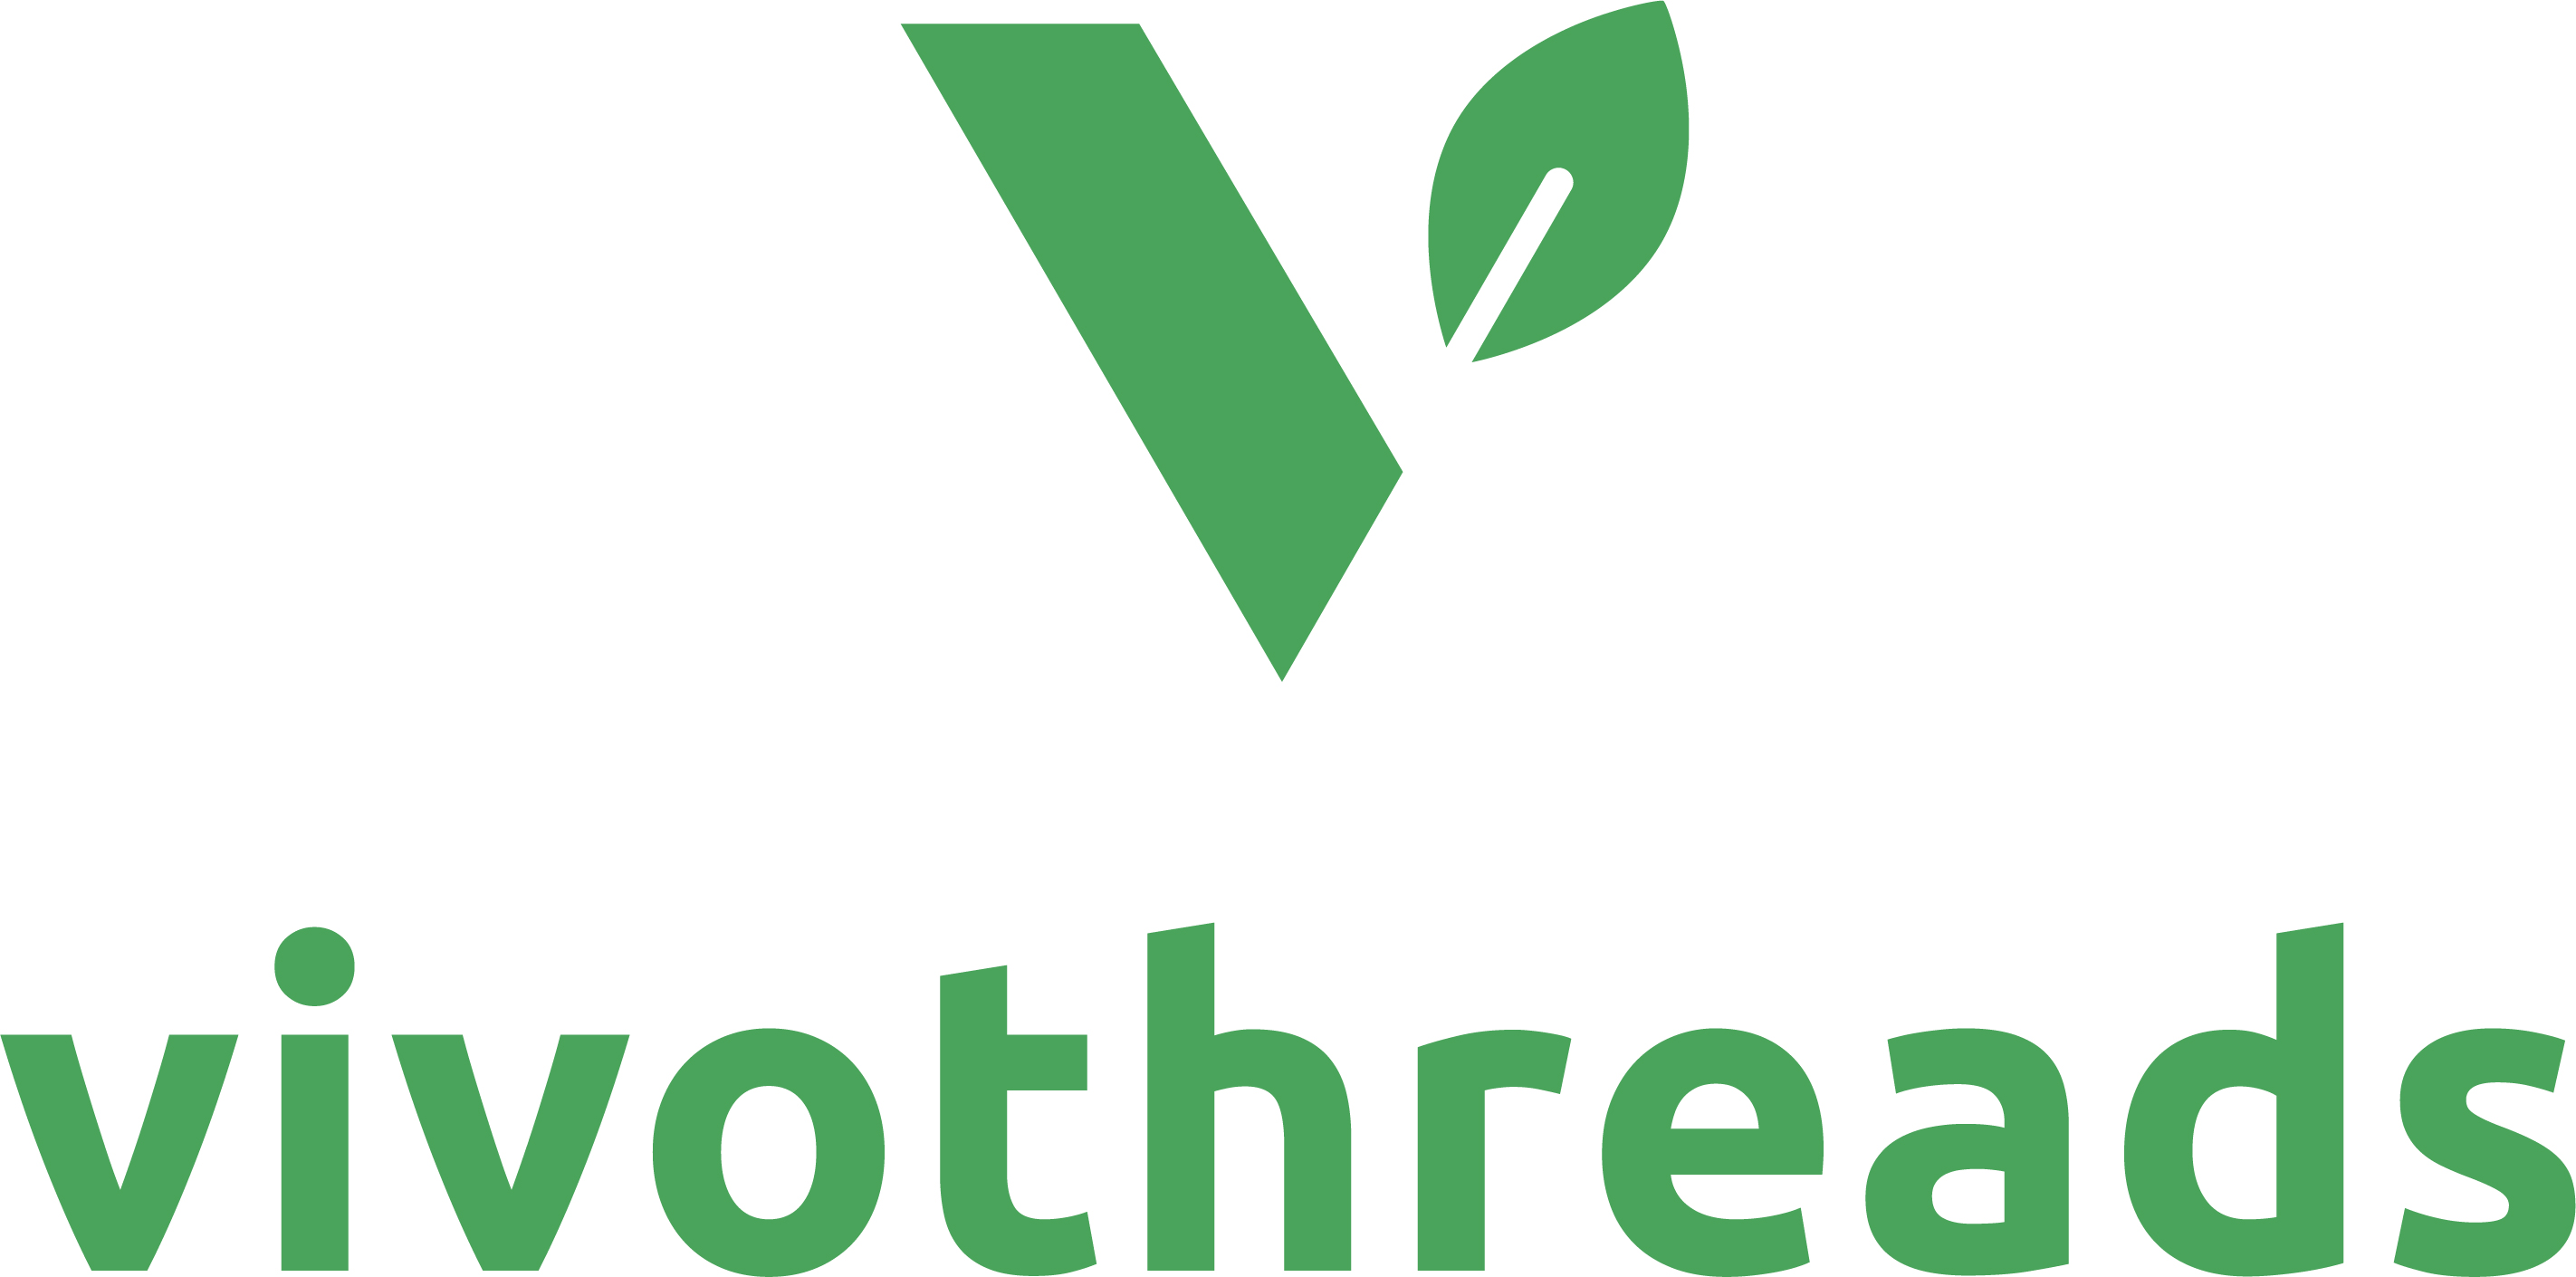 Vivothreads logo